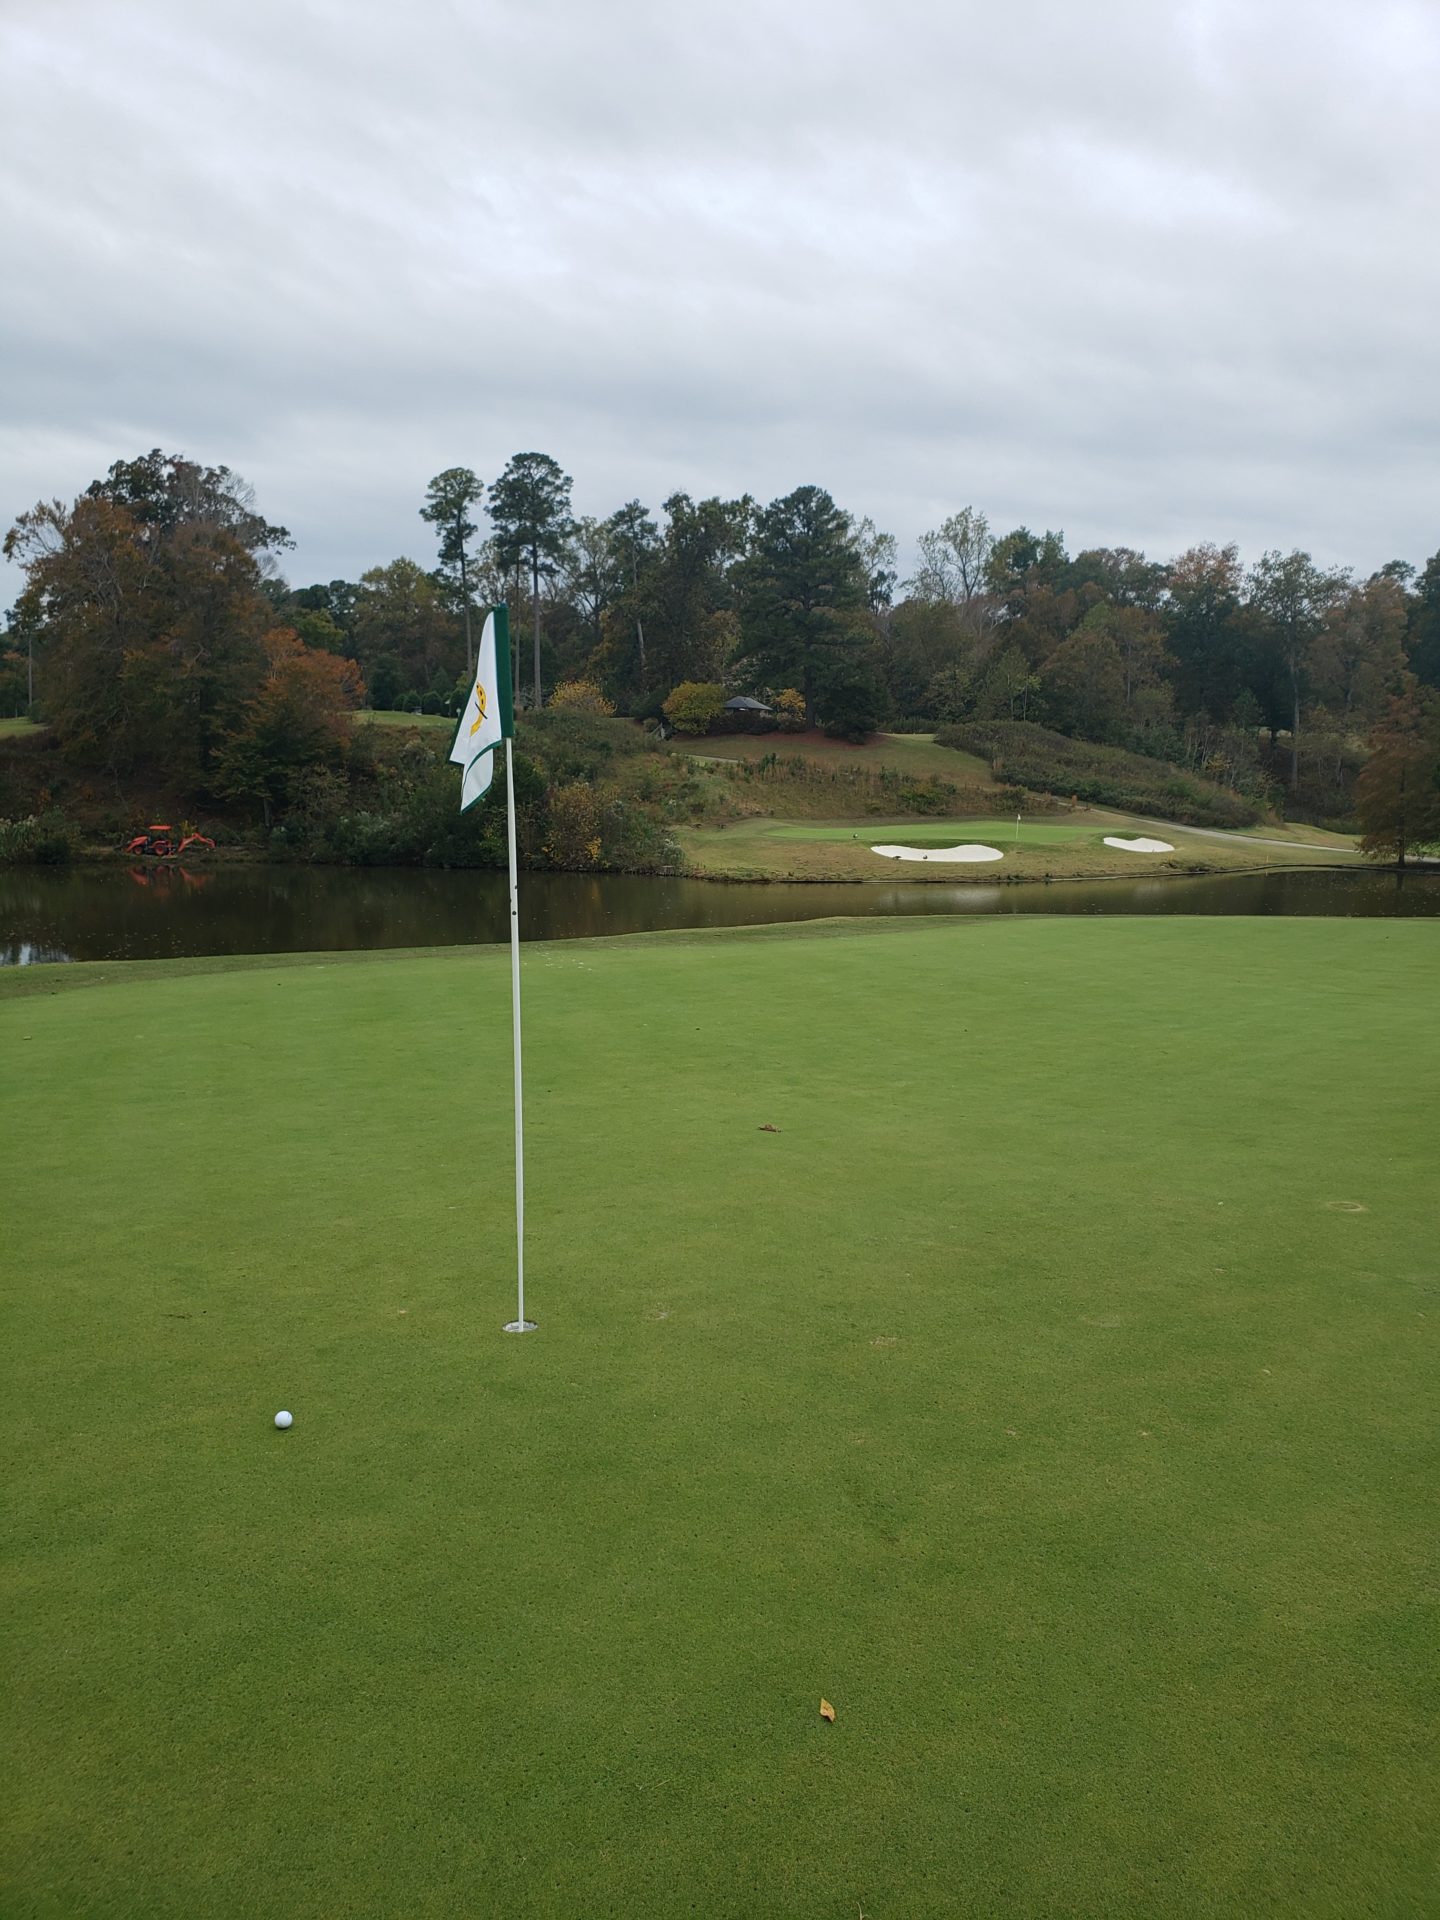 a golf course with a flag on the flagpole